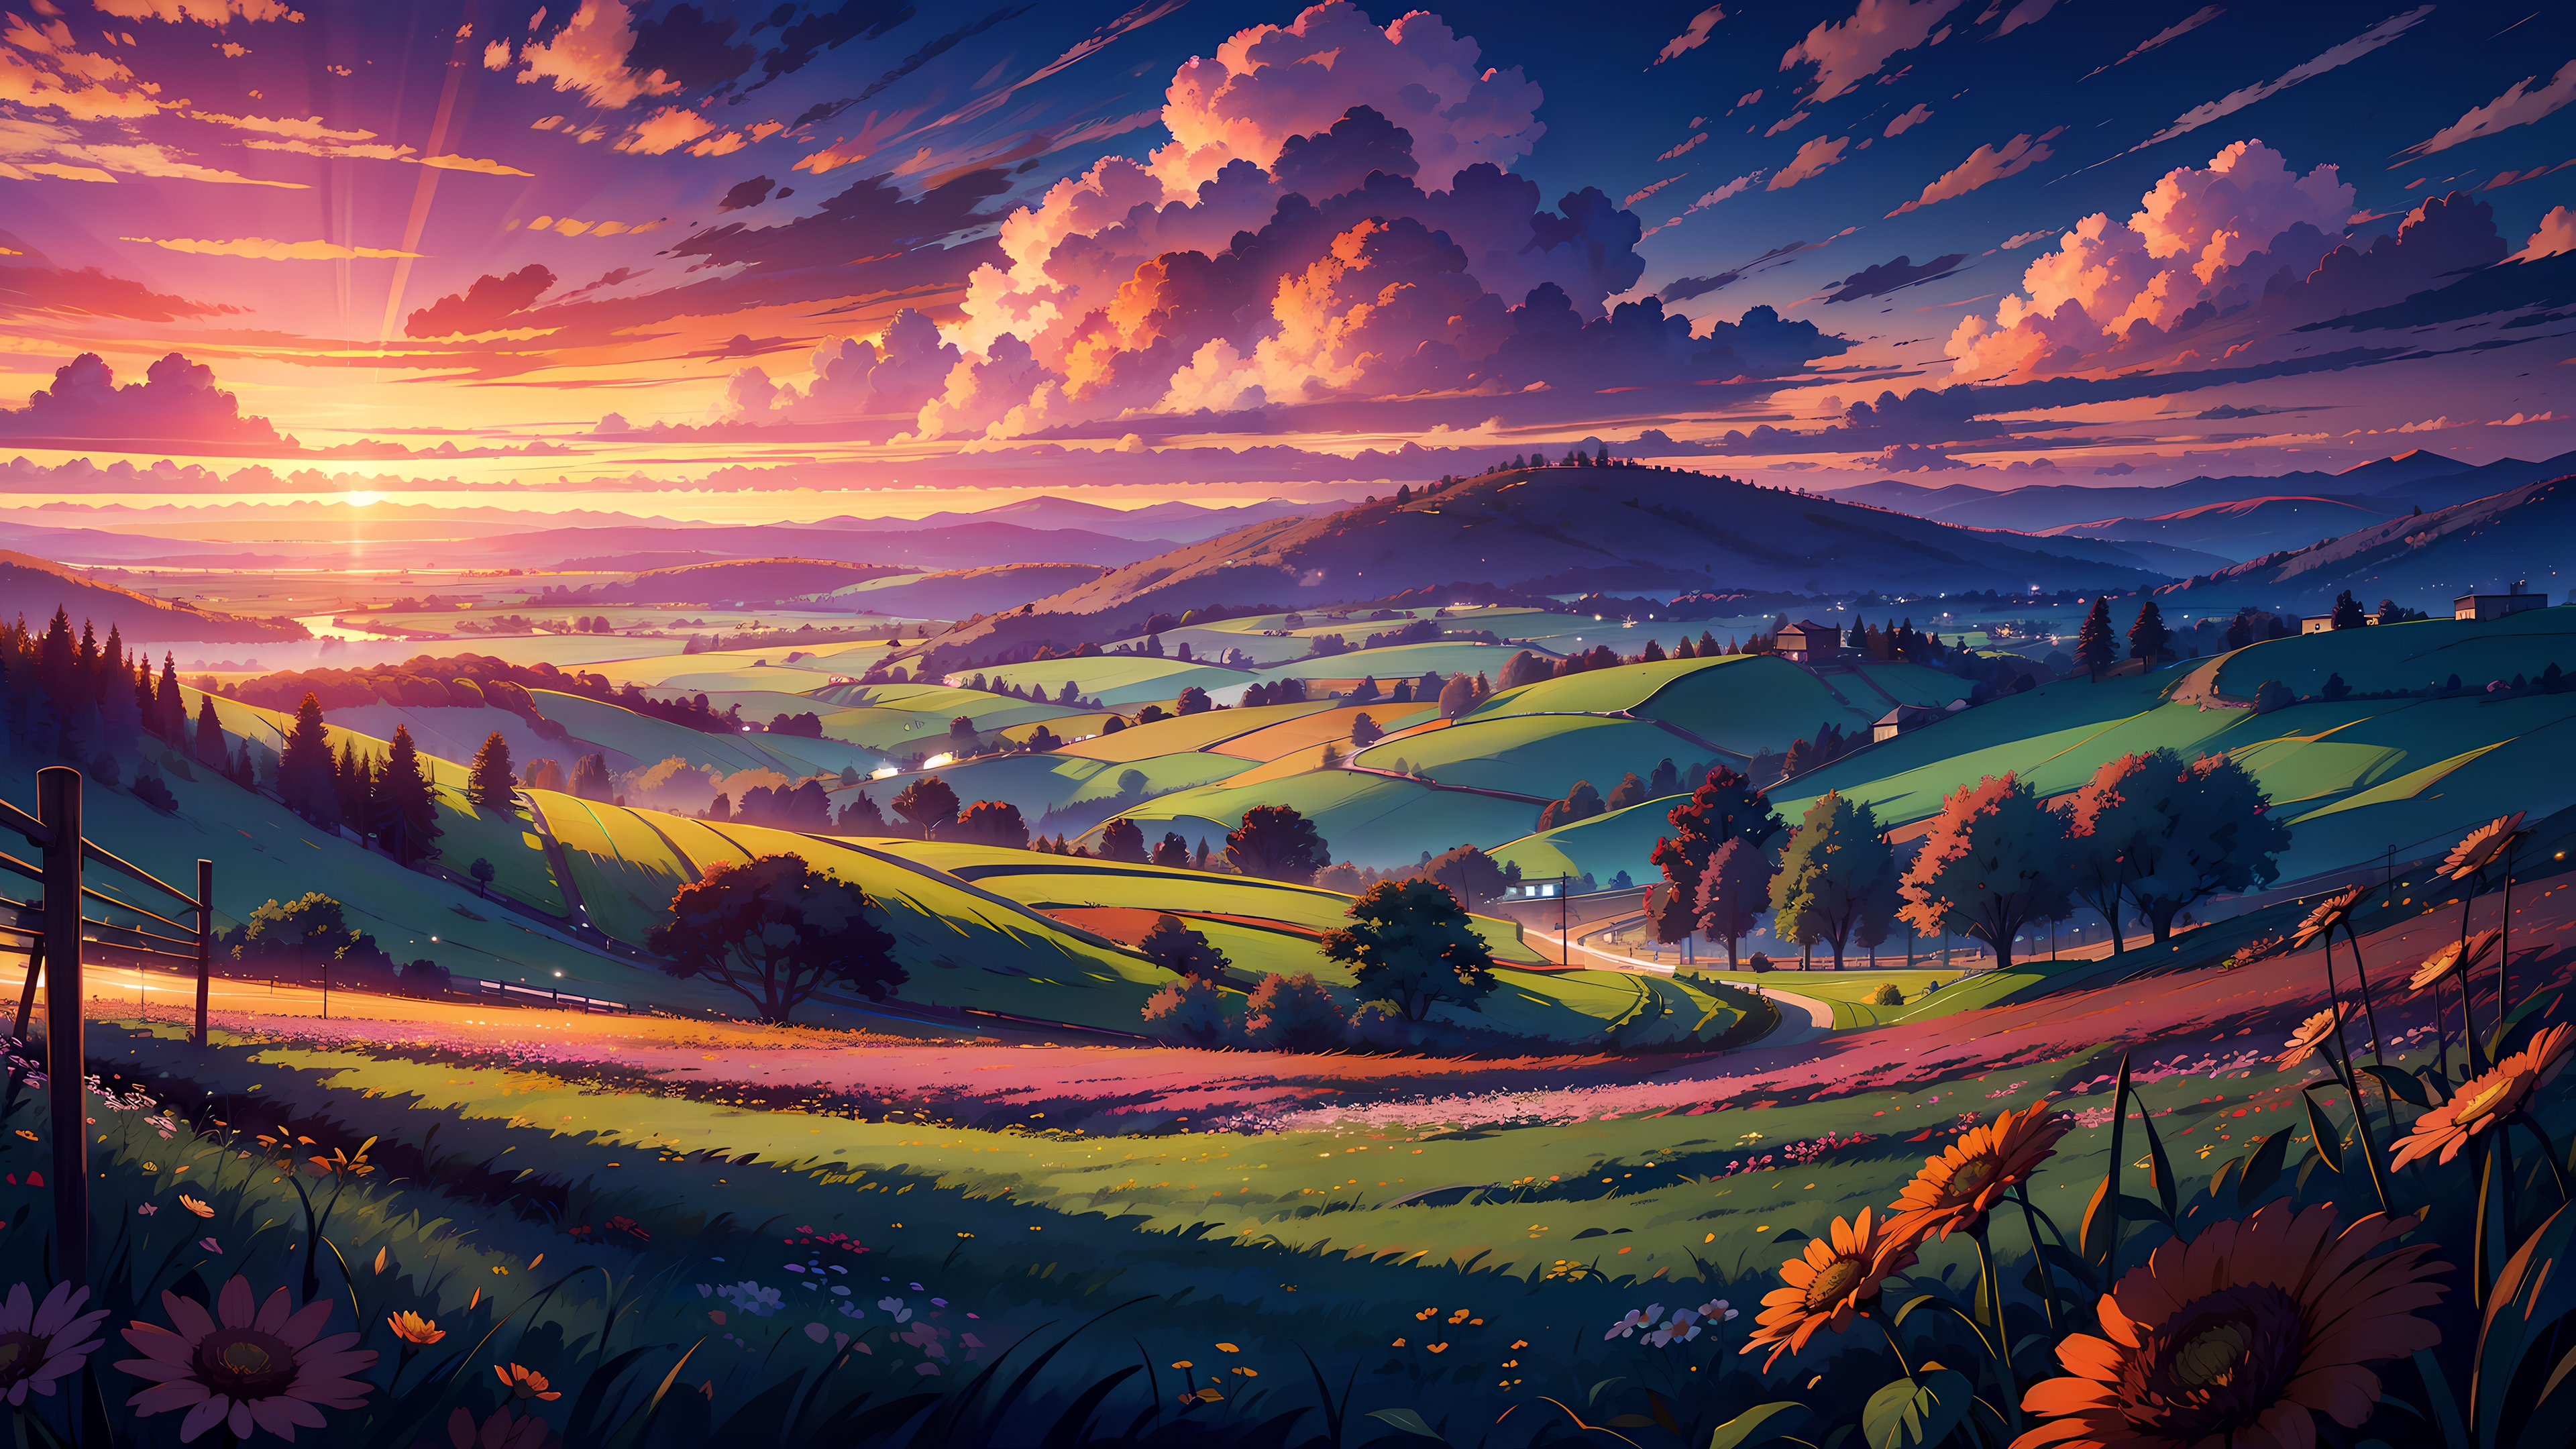 The rising sun illuminates the hilly landscape